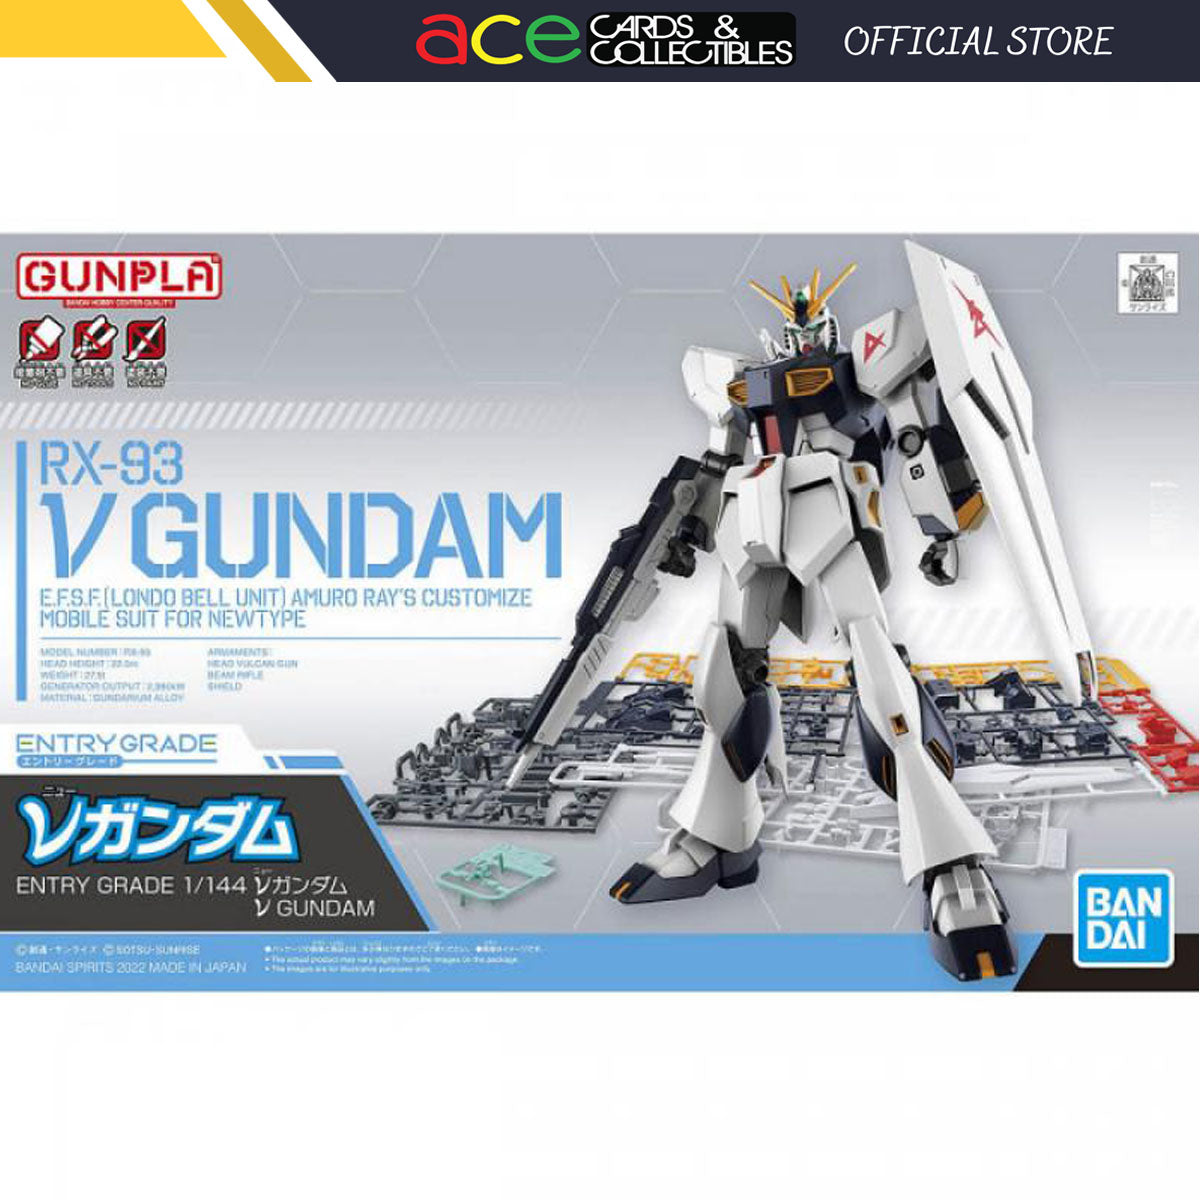 Gunpla Entry Grade 1/144 RX-93 ν Gundam (Gundam Model Kits)-Bandai-Ace Cards & Collectibles